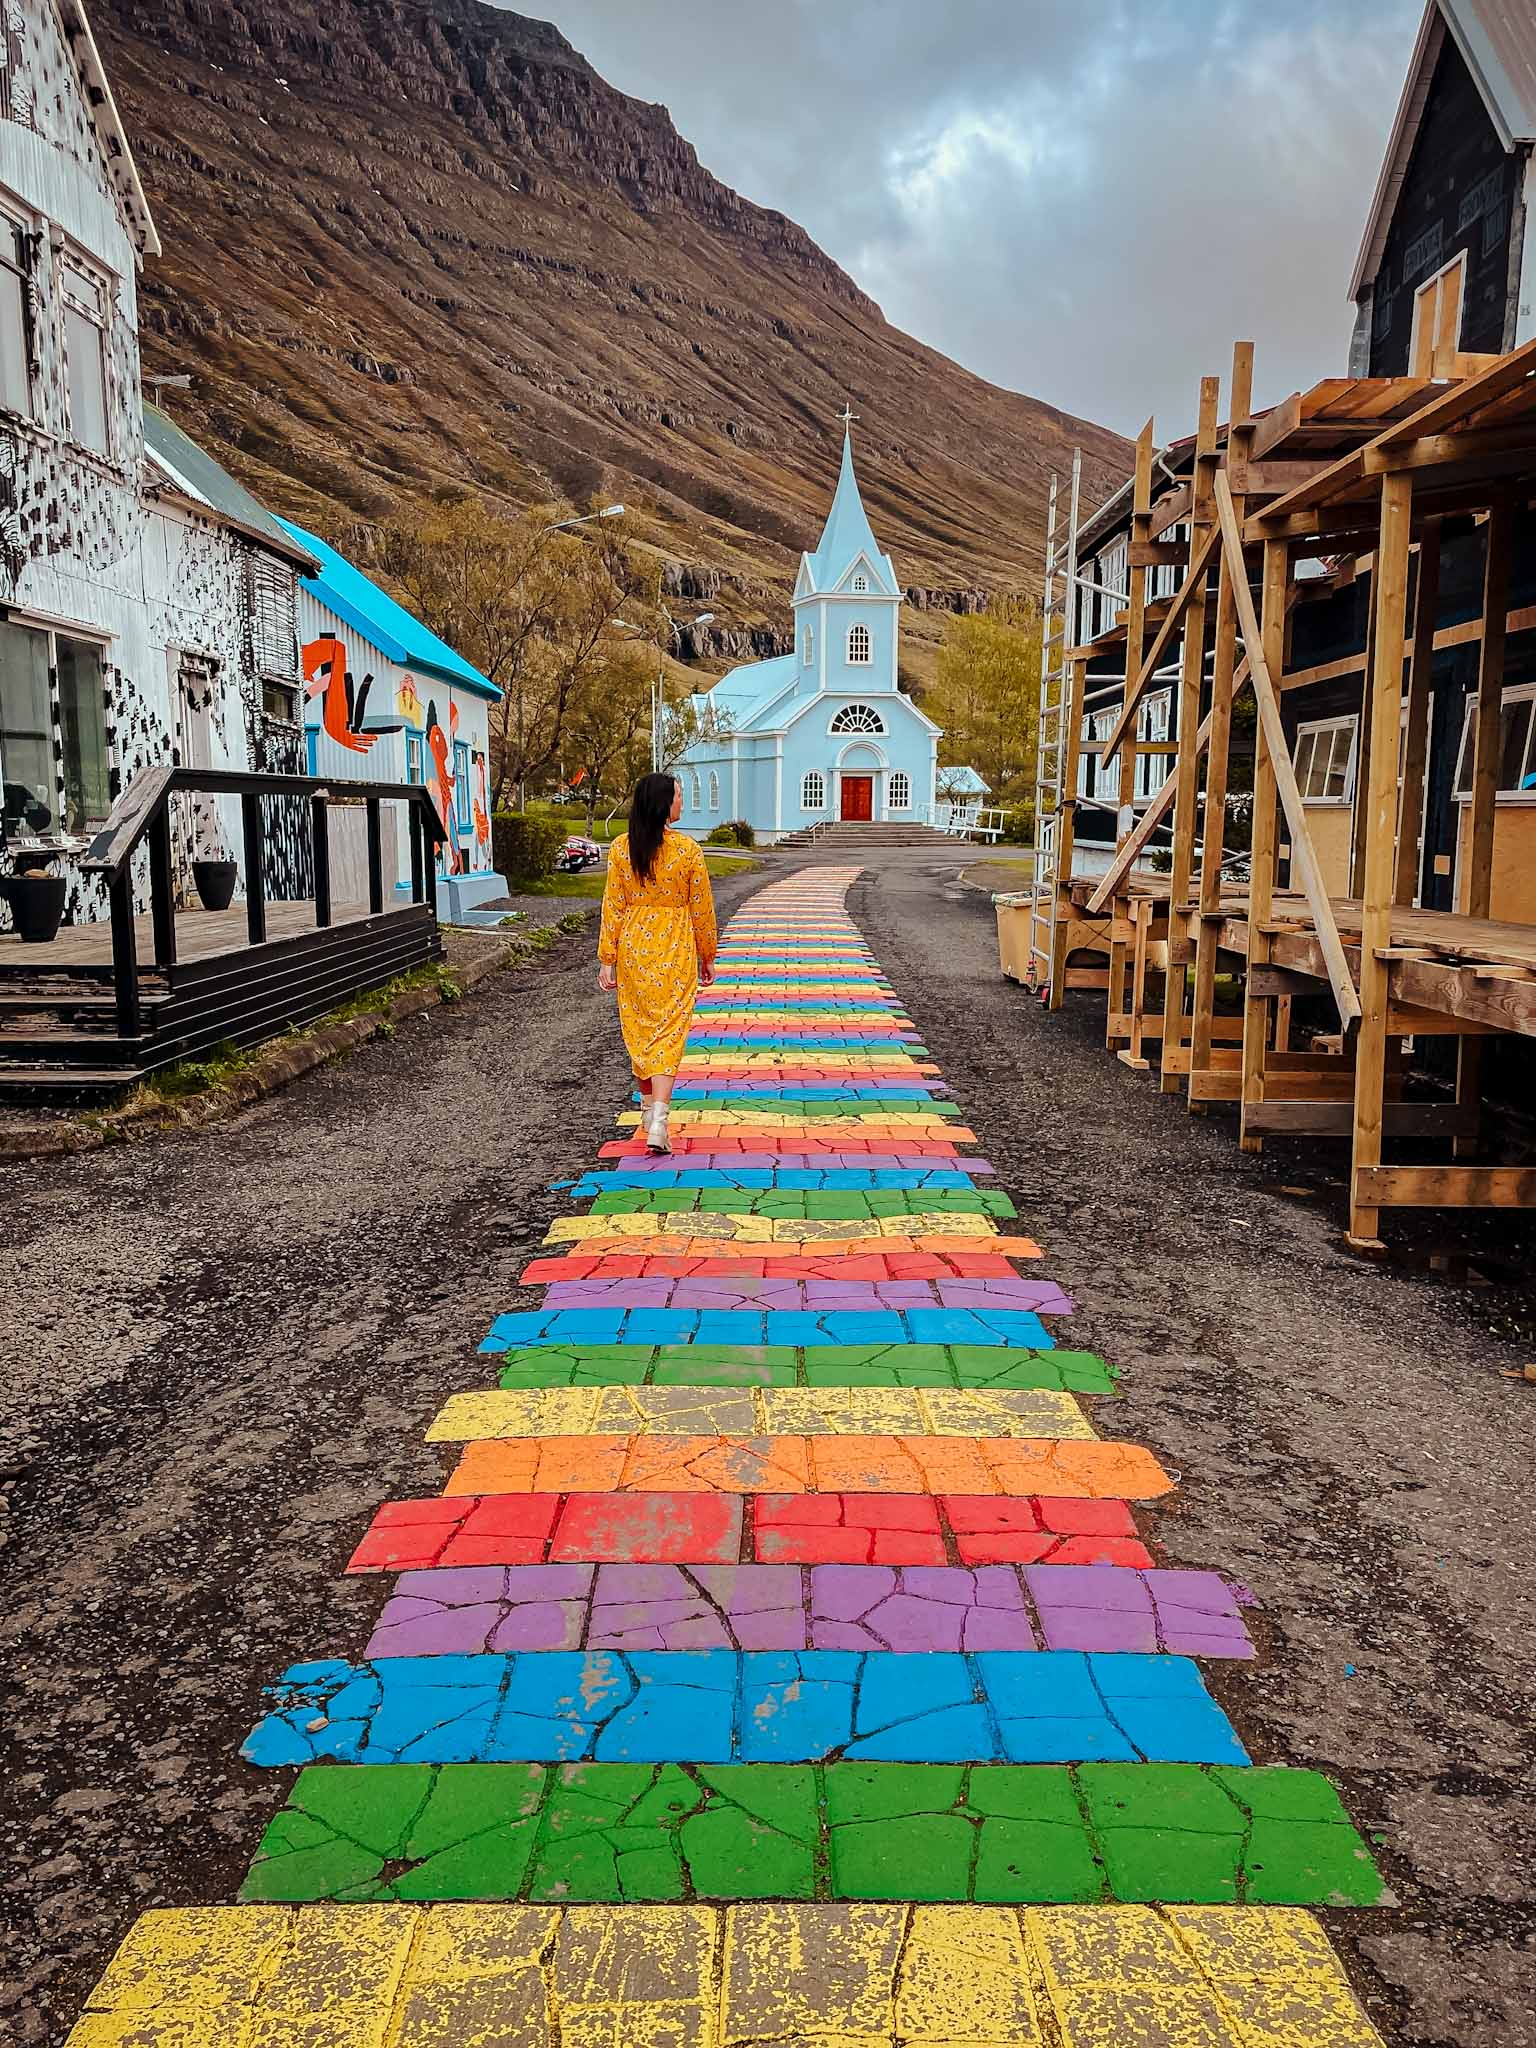 Seyðisfjarðarkirkja - Churches in Iceland